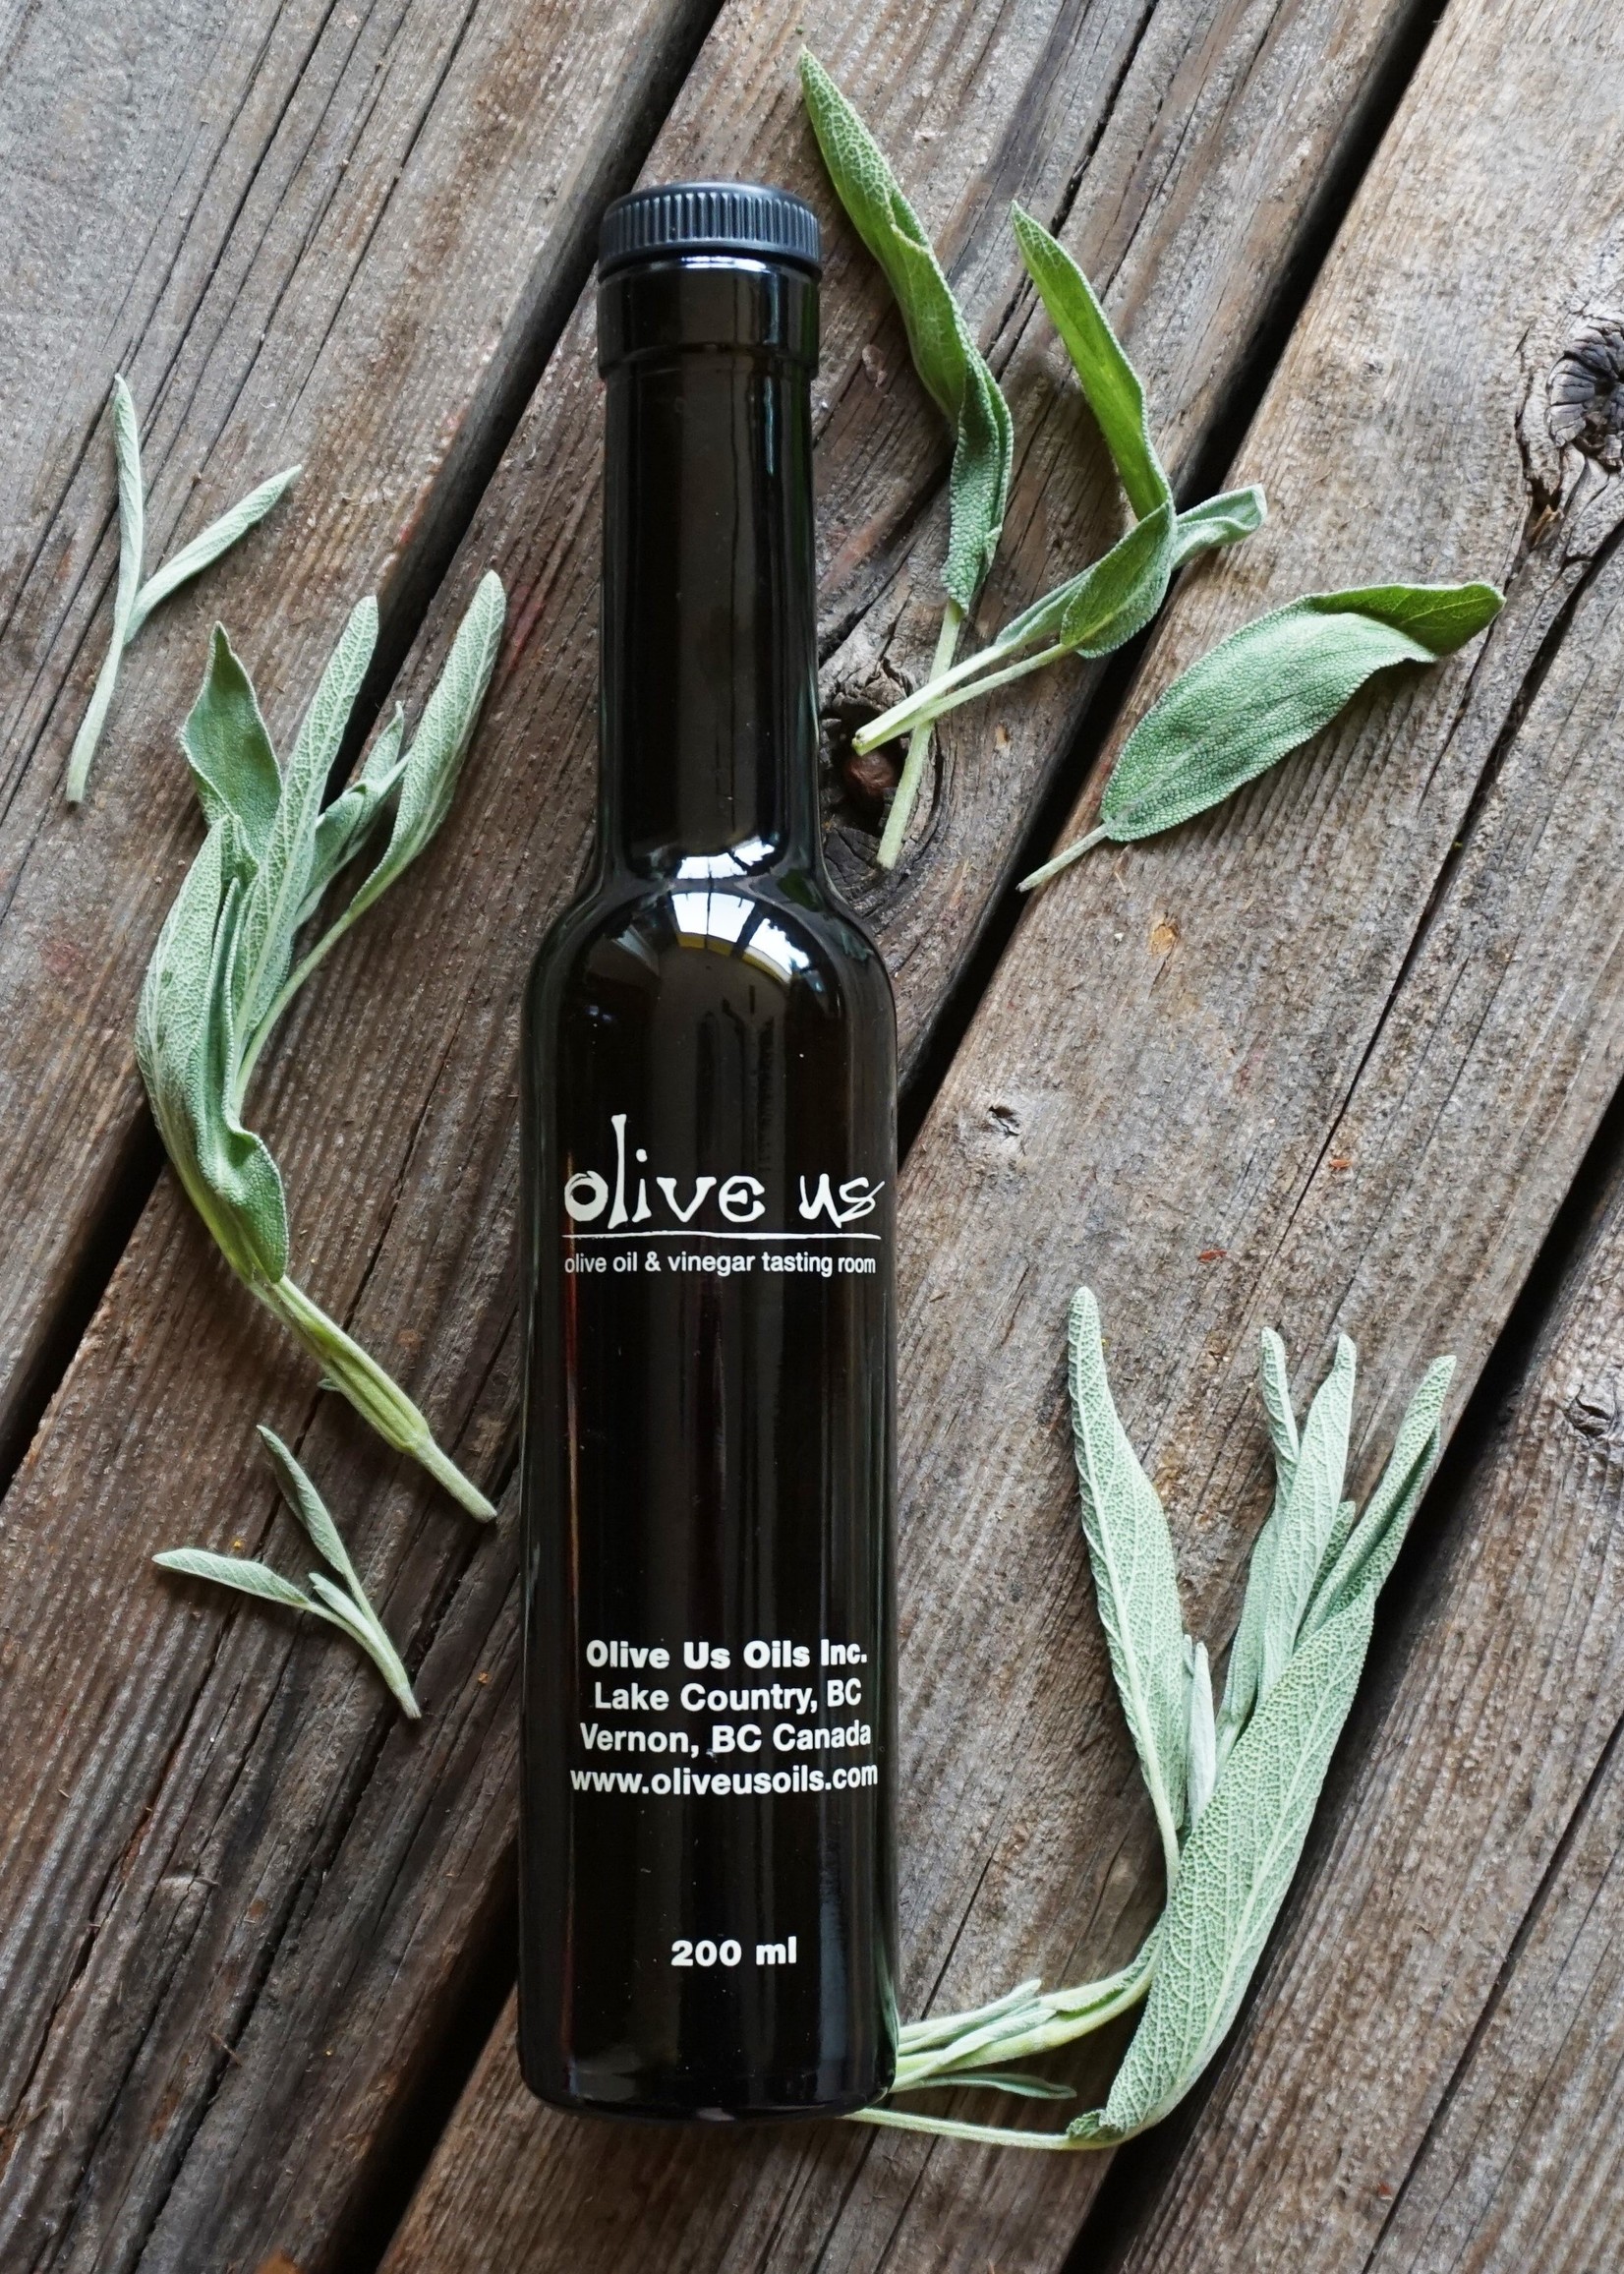 Olive Us Fused Greek Sage Olive Oil